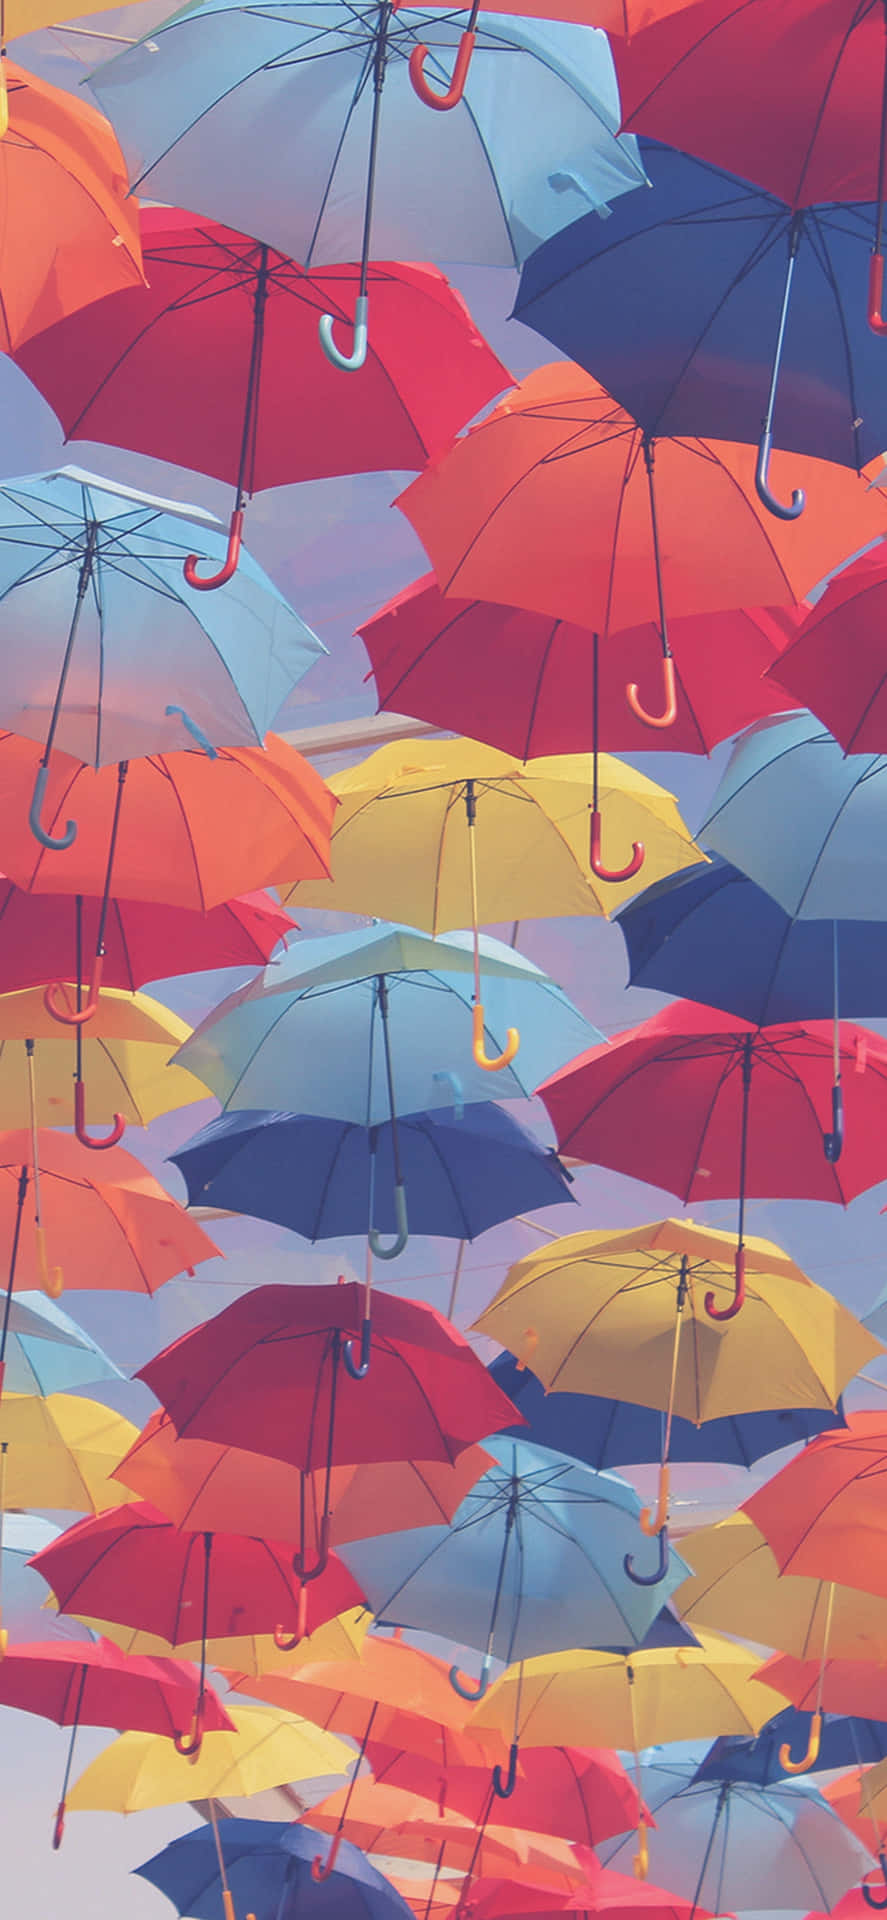 Colorful Umbrella Canopy